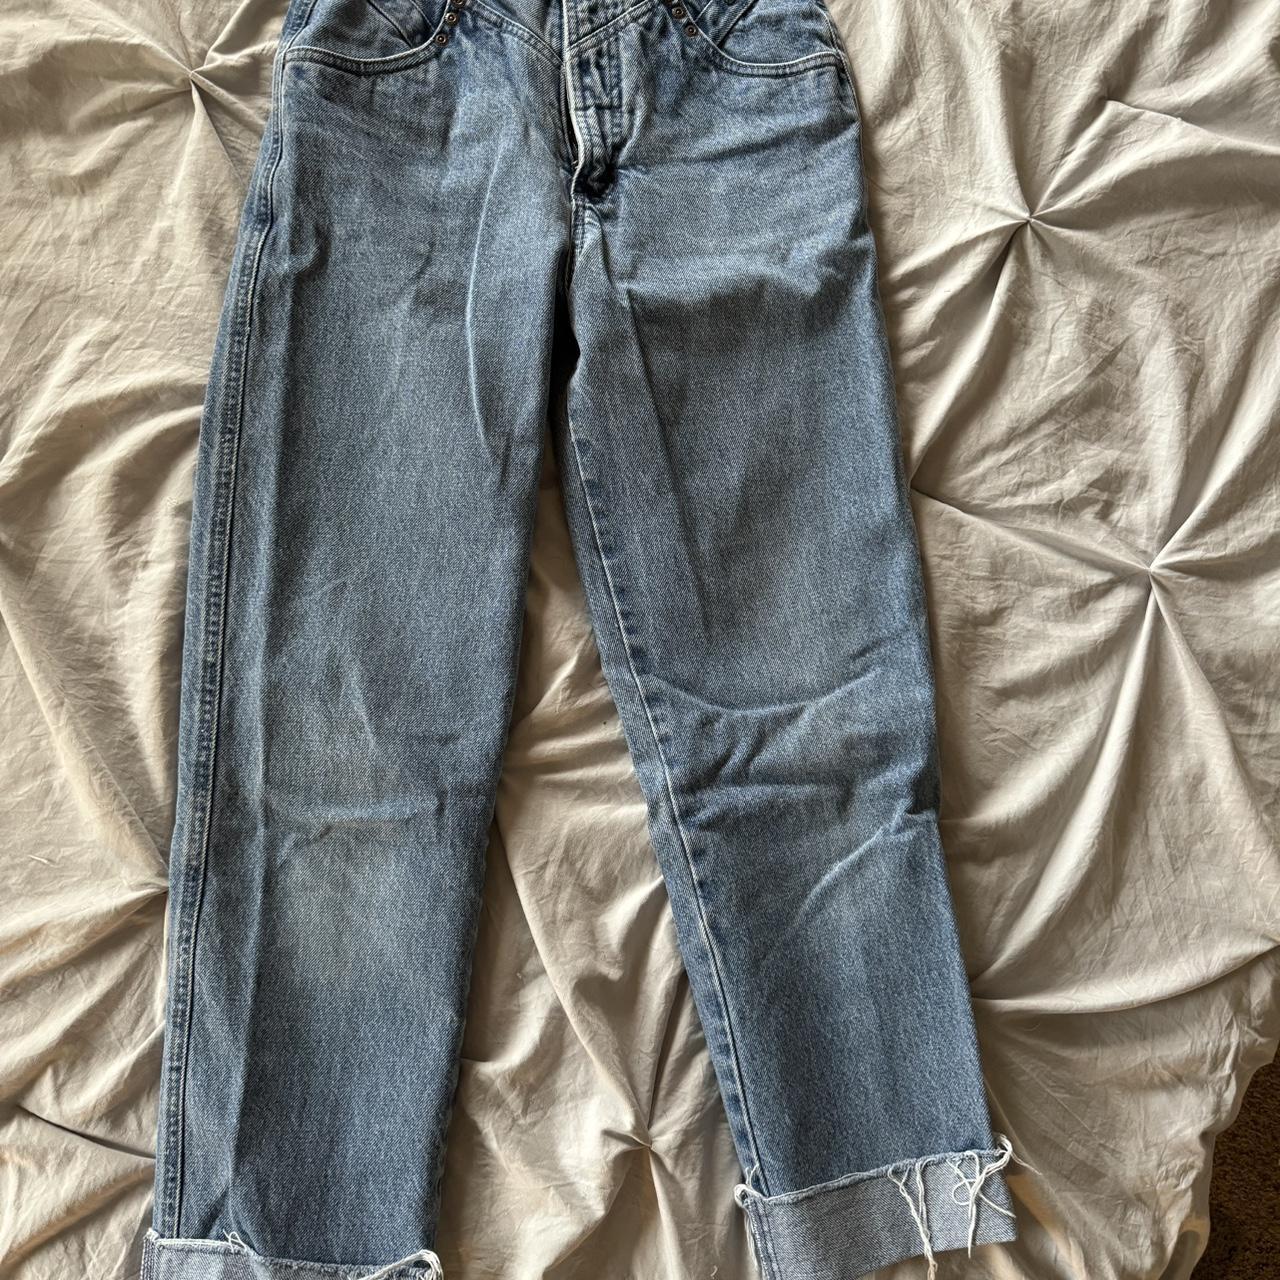 Rockies vintage jeans with raw hem. Still has... - Depop